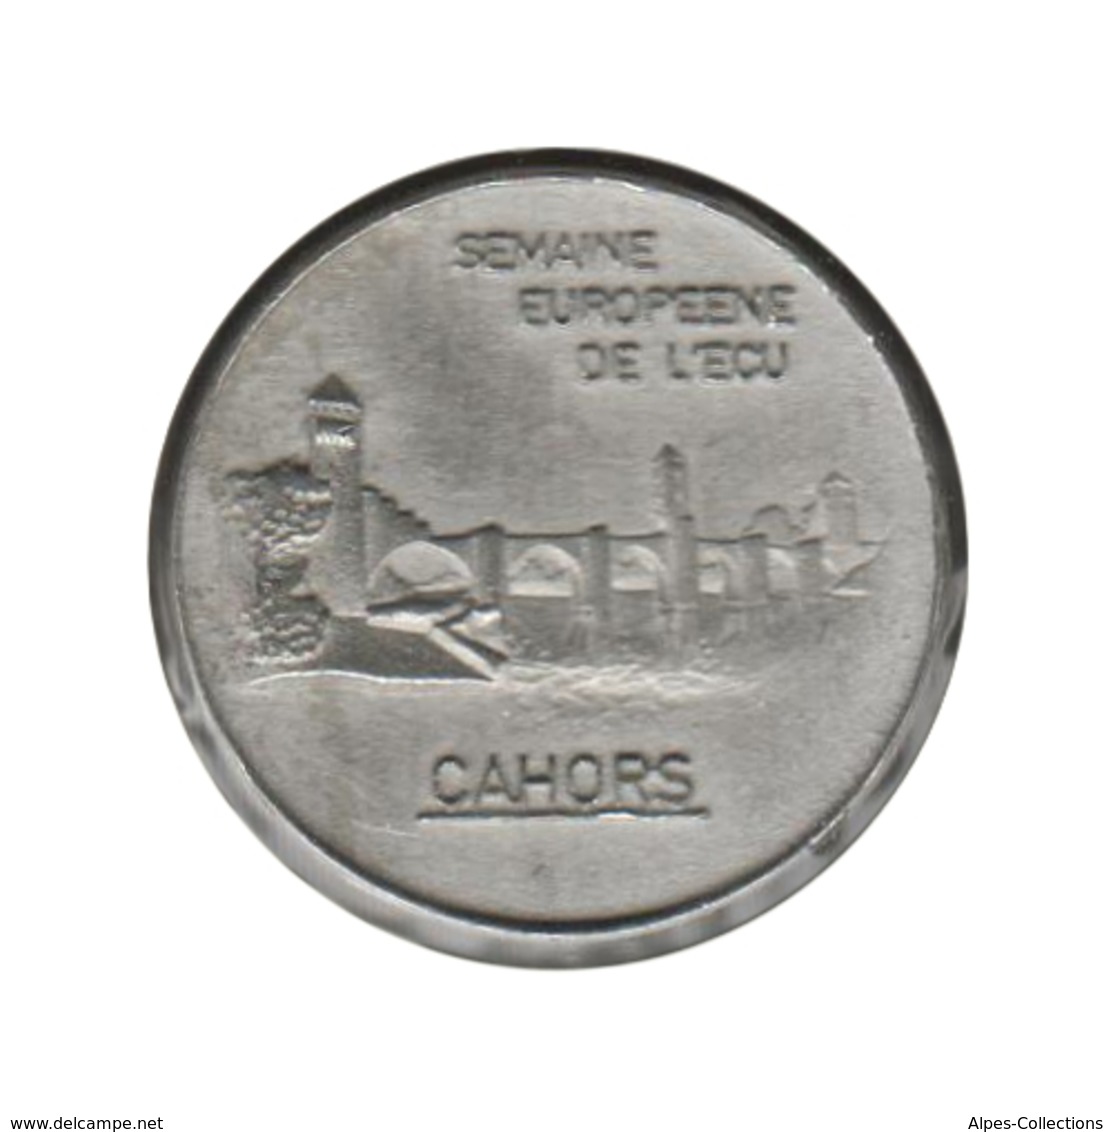 CAHORS - EC0010.1 - 1 ECU DES VILLES - Réf: NR - 1992 - Euros Des Villes